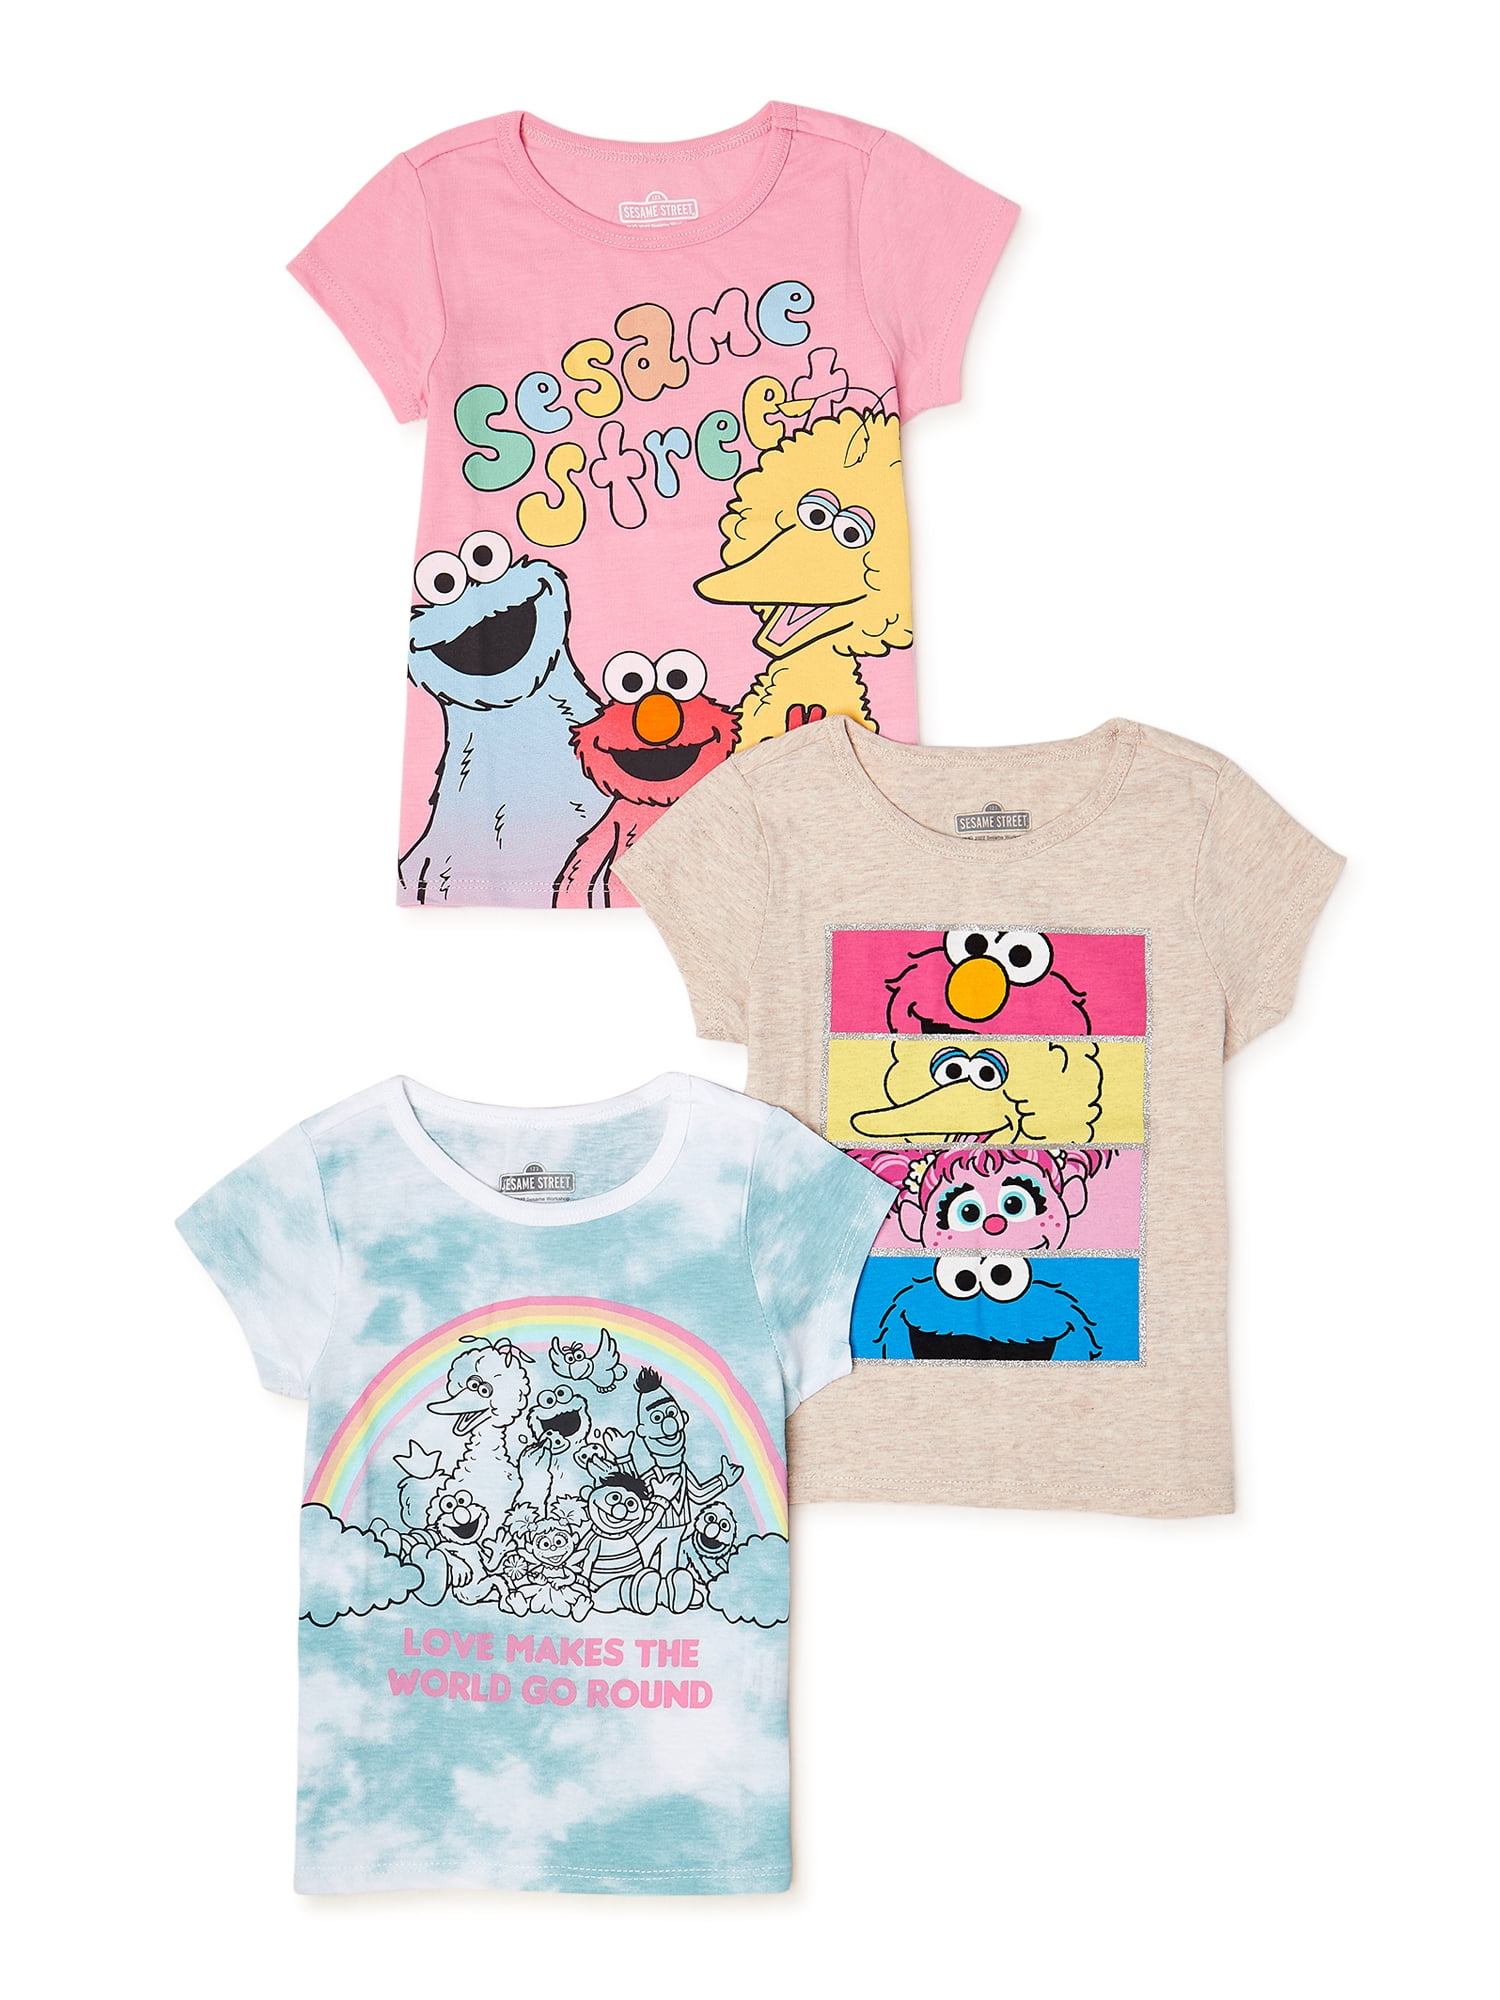 NWT Garanimals Toddler Infants Girls Long Sleeve T-shirt Size 24 month 